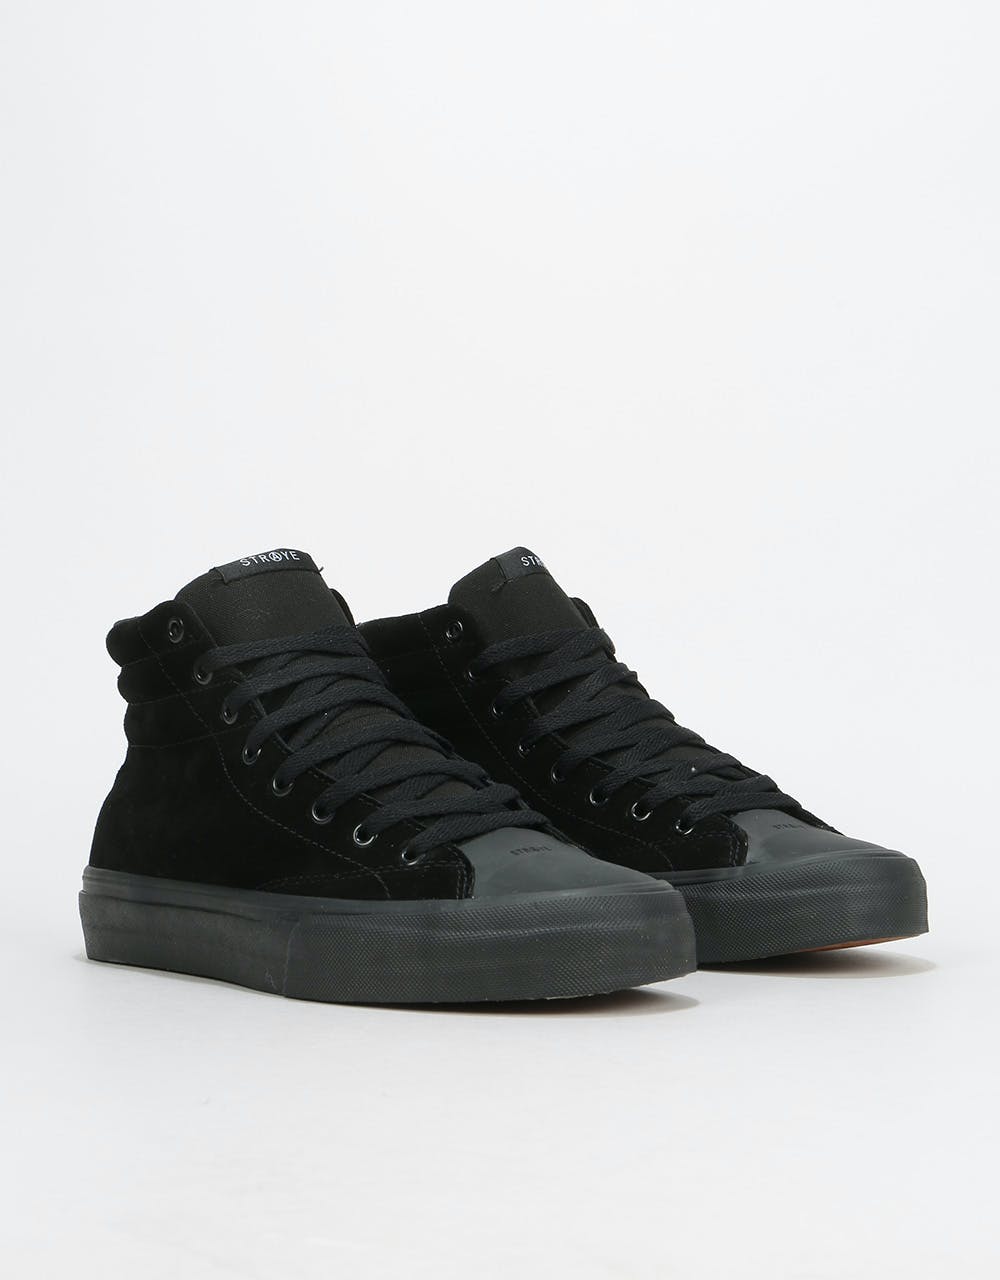 Straye Venice High Skate Shoes - Black/Black Suede